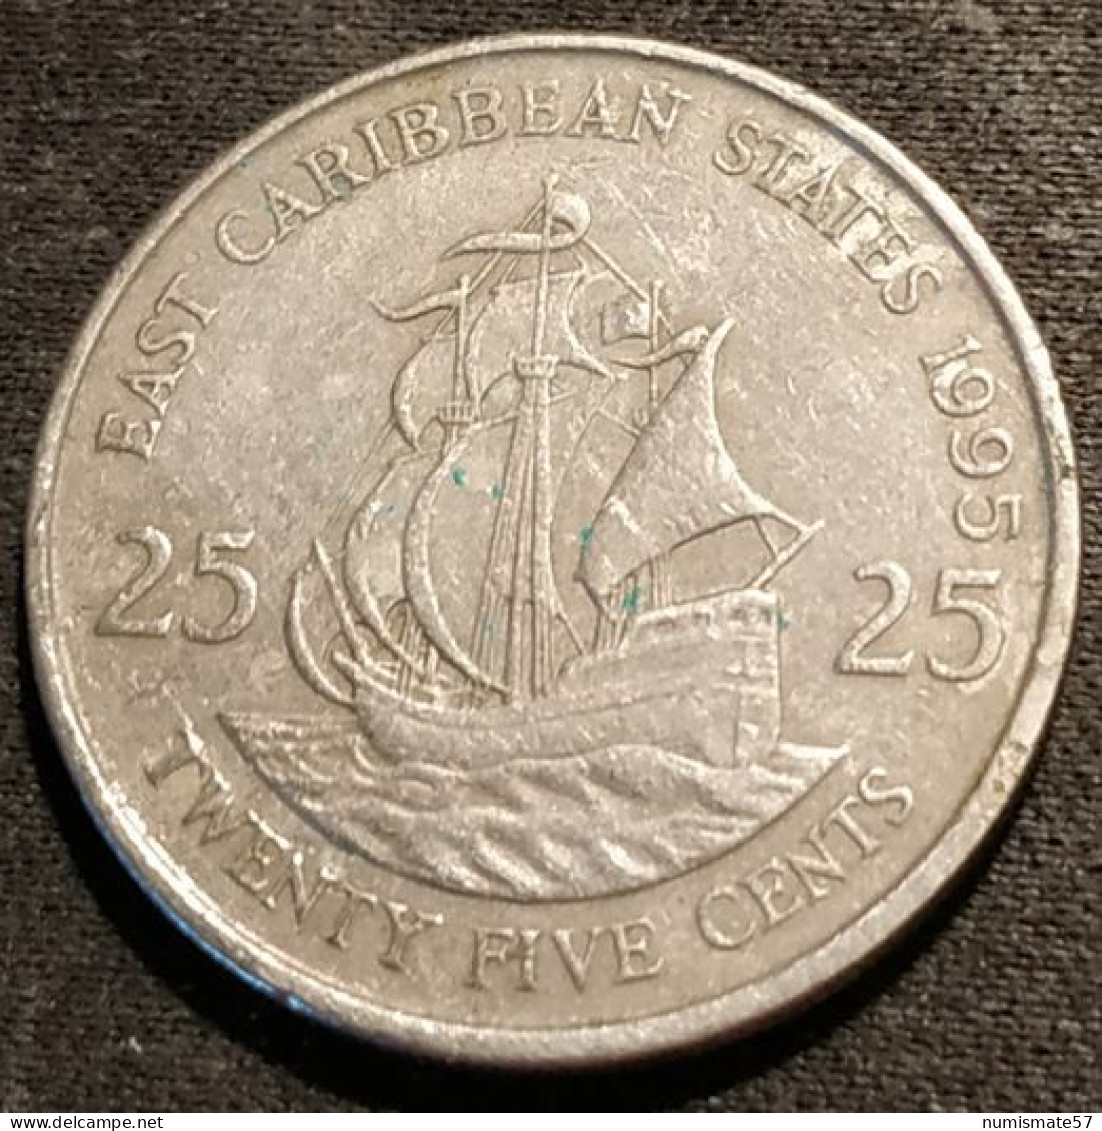 EAST CARIBBEAN STATES - 25 CENTS 1995 - Elizabeth II - 2e Effigie - KM 14 - ( Caraibes ) - Caribe Oriental (Estados Del)